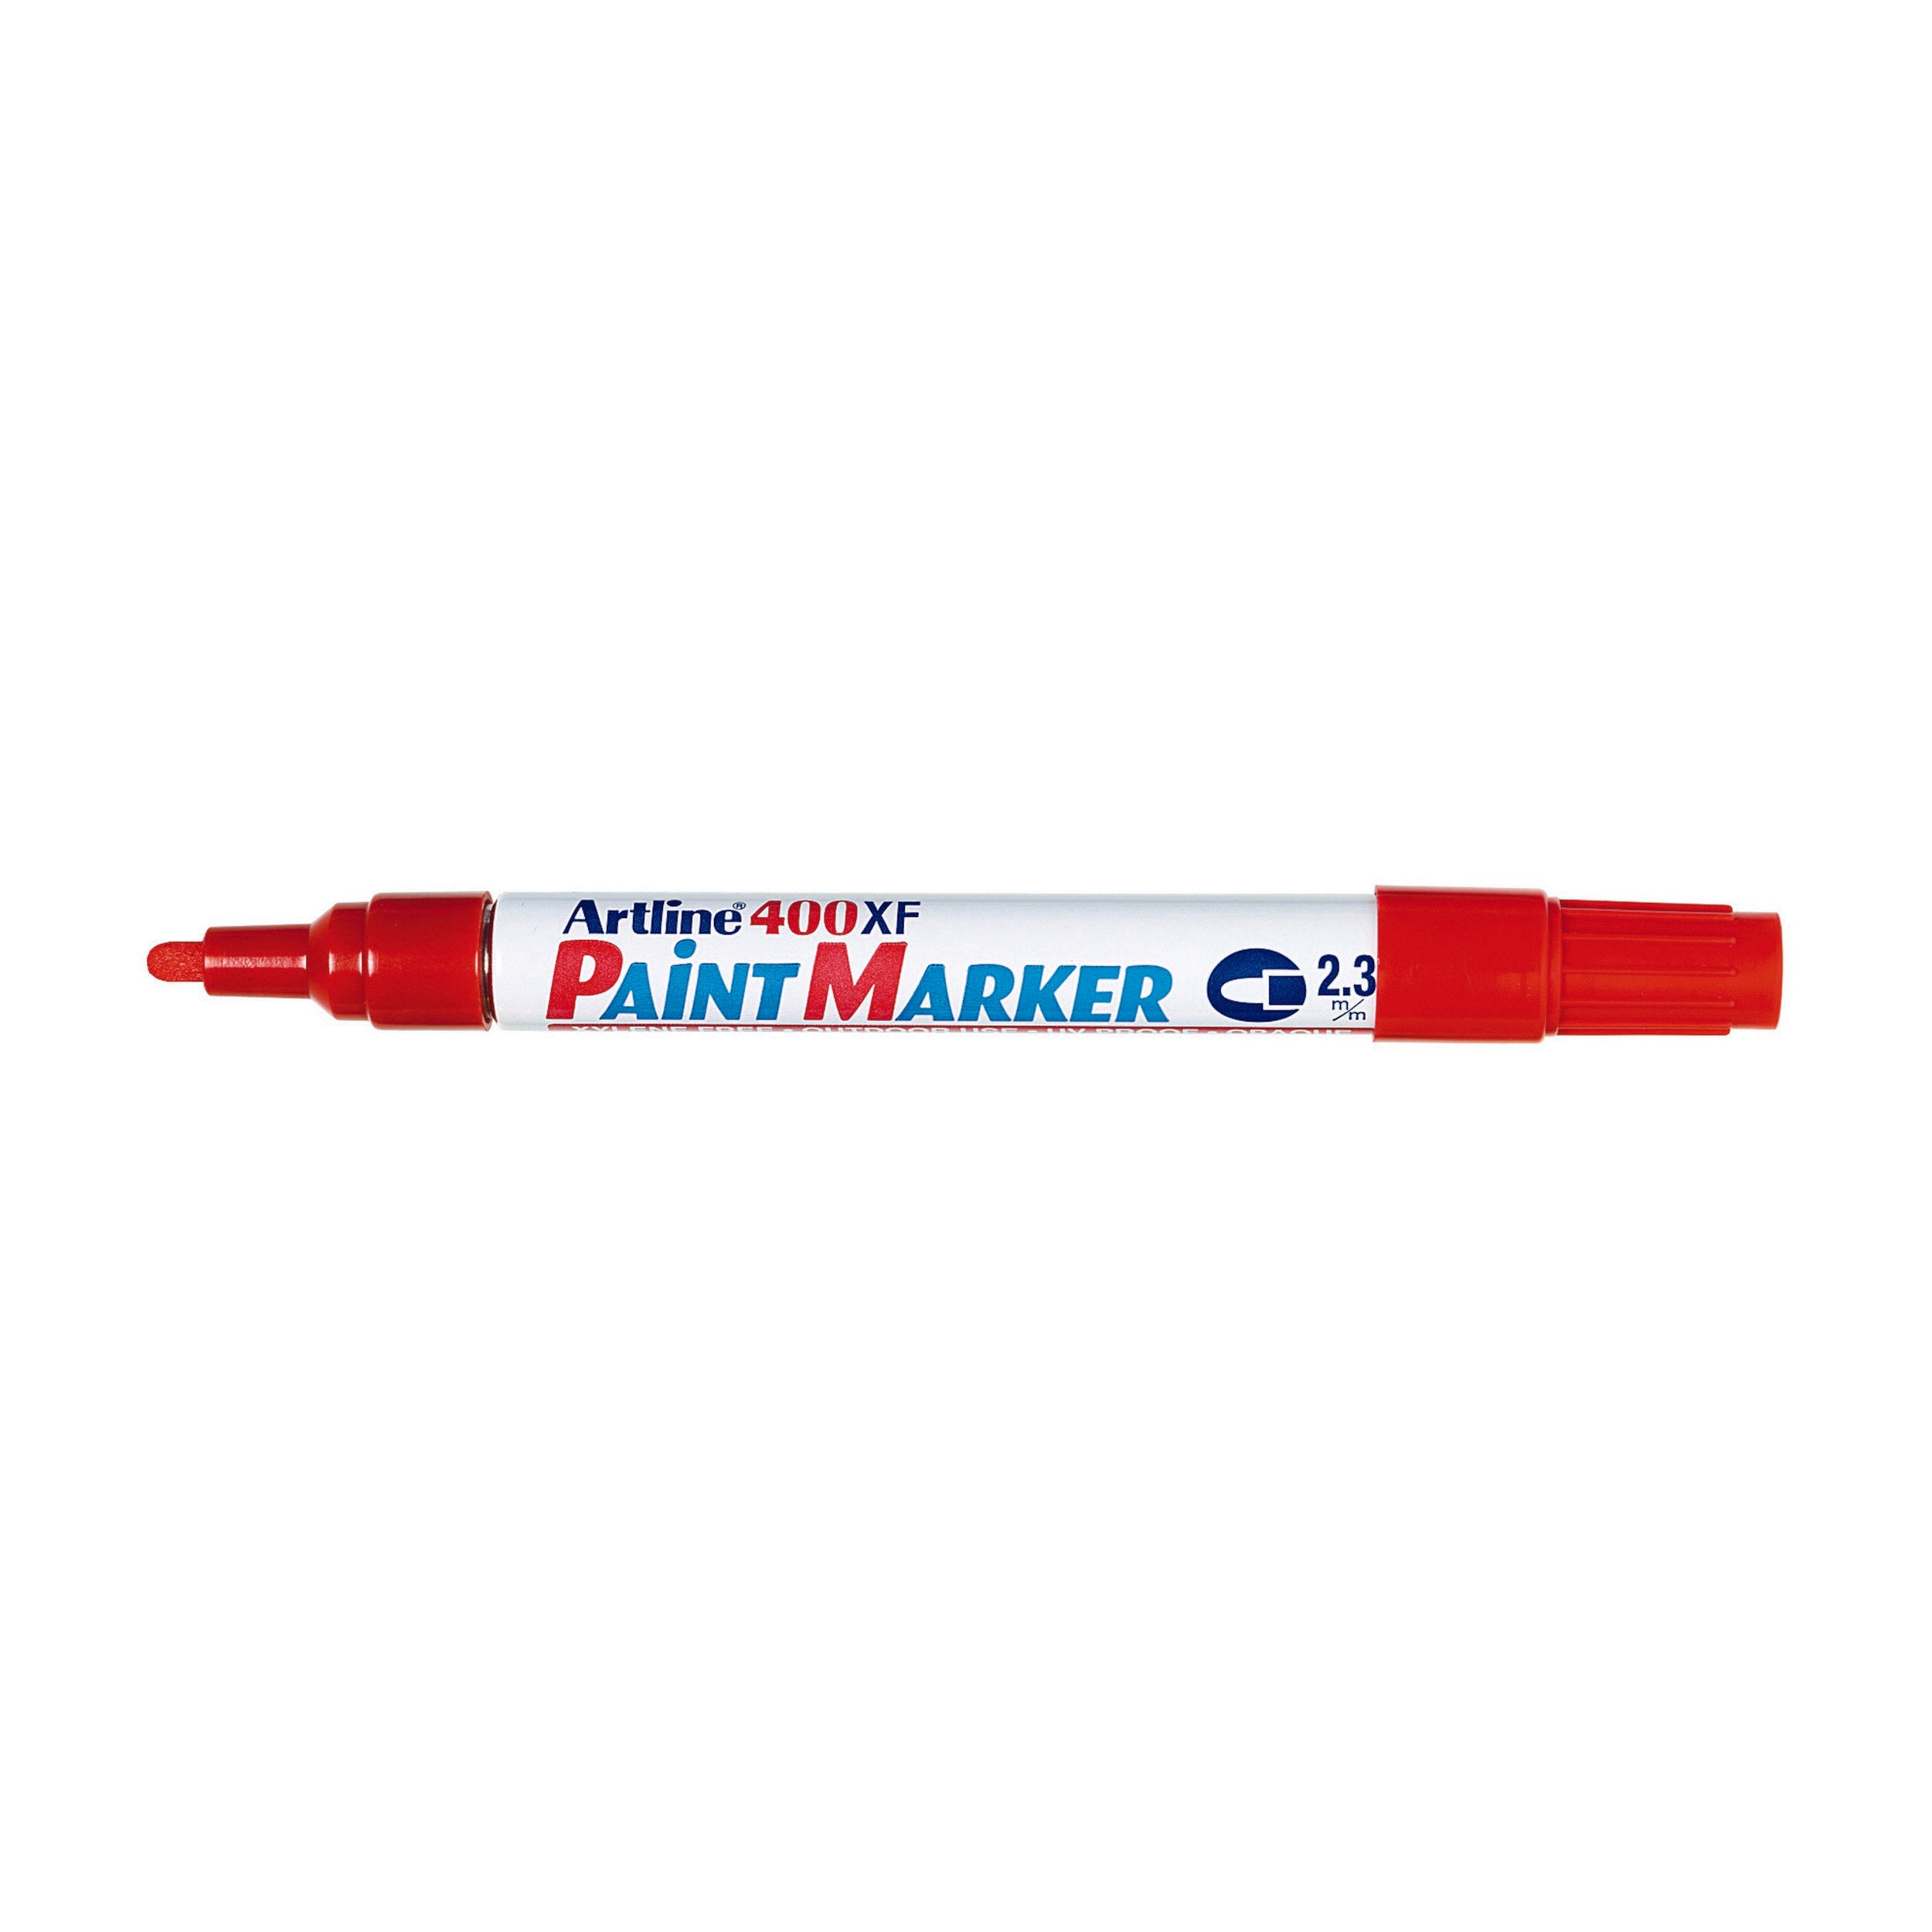 Artline Paint Marker 400XF, red, lid off